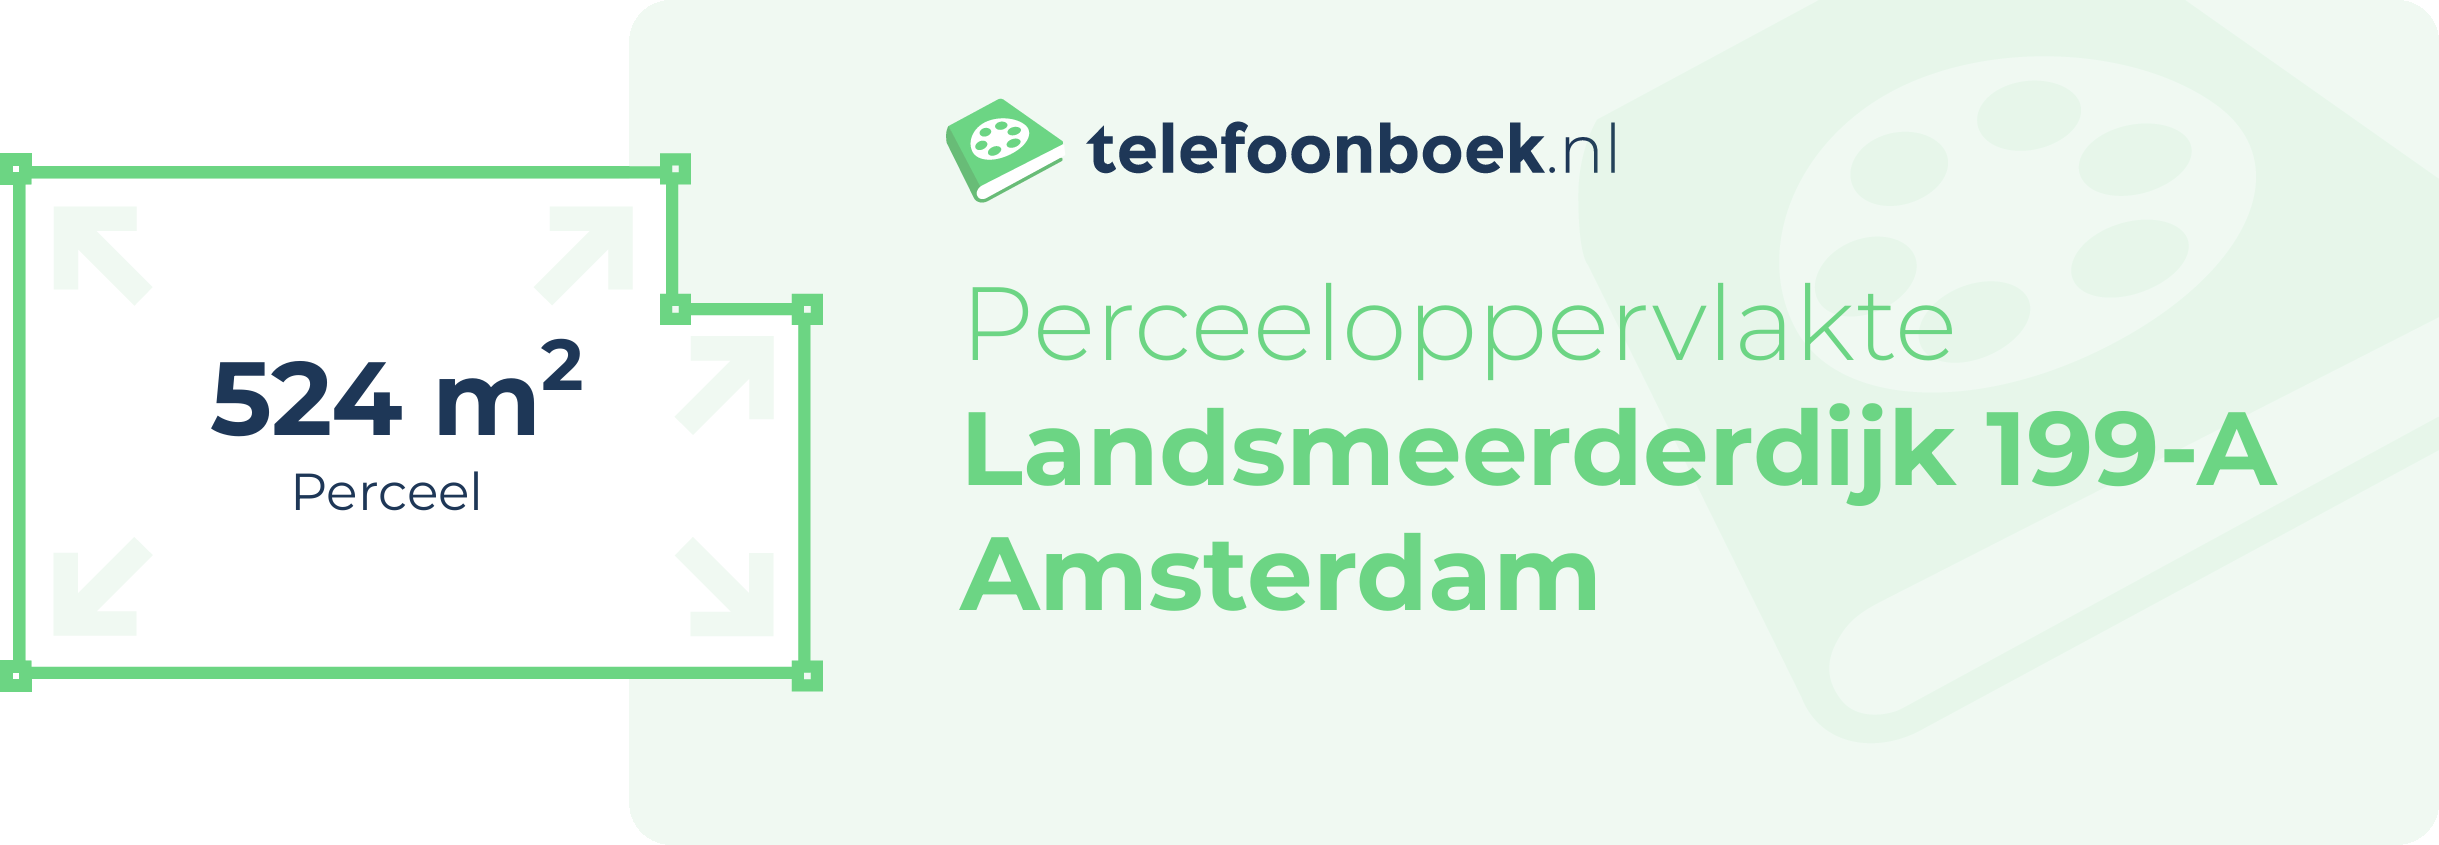 Perceeloppervlakte Landsmeerderdijk 199-A Amsterdam